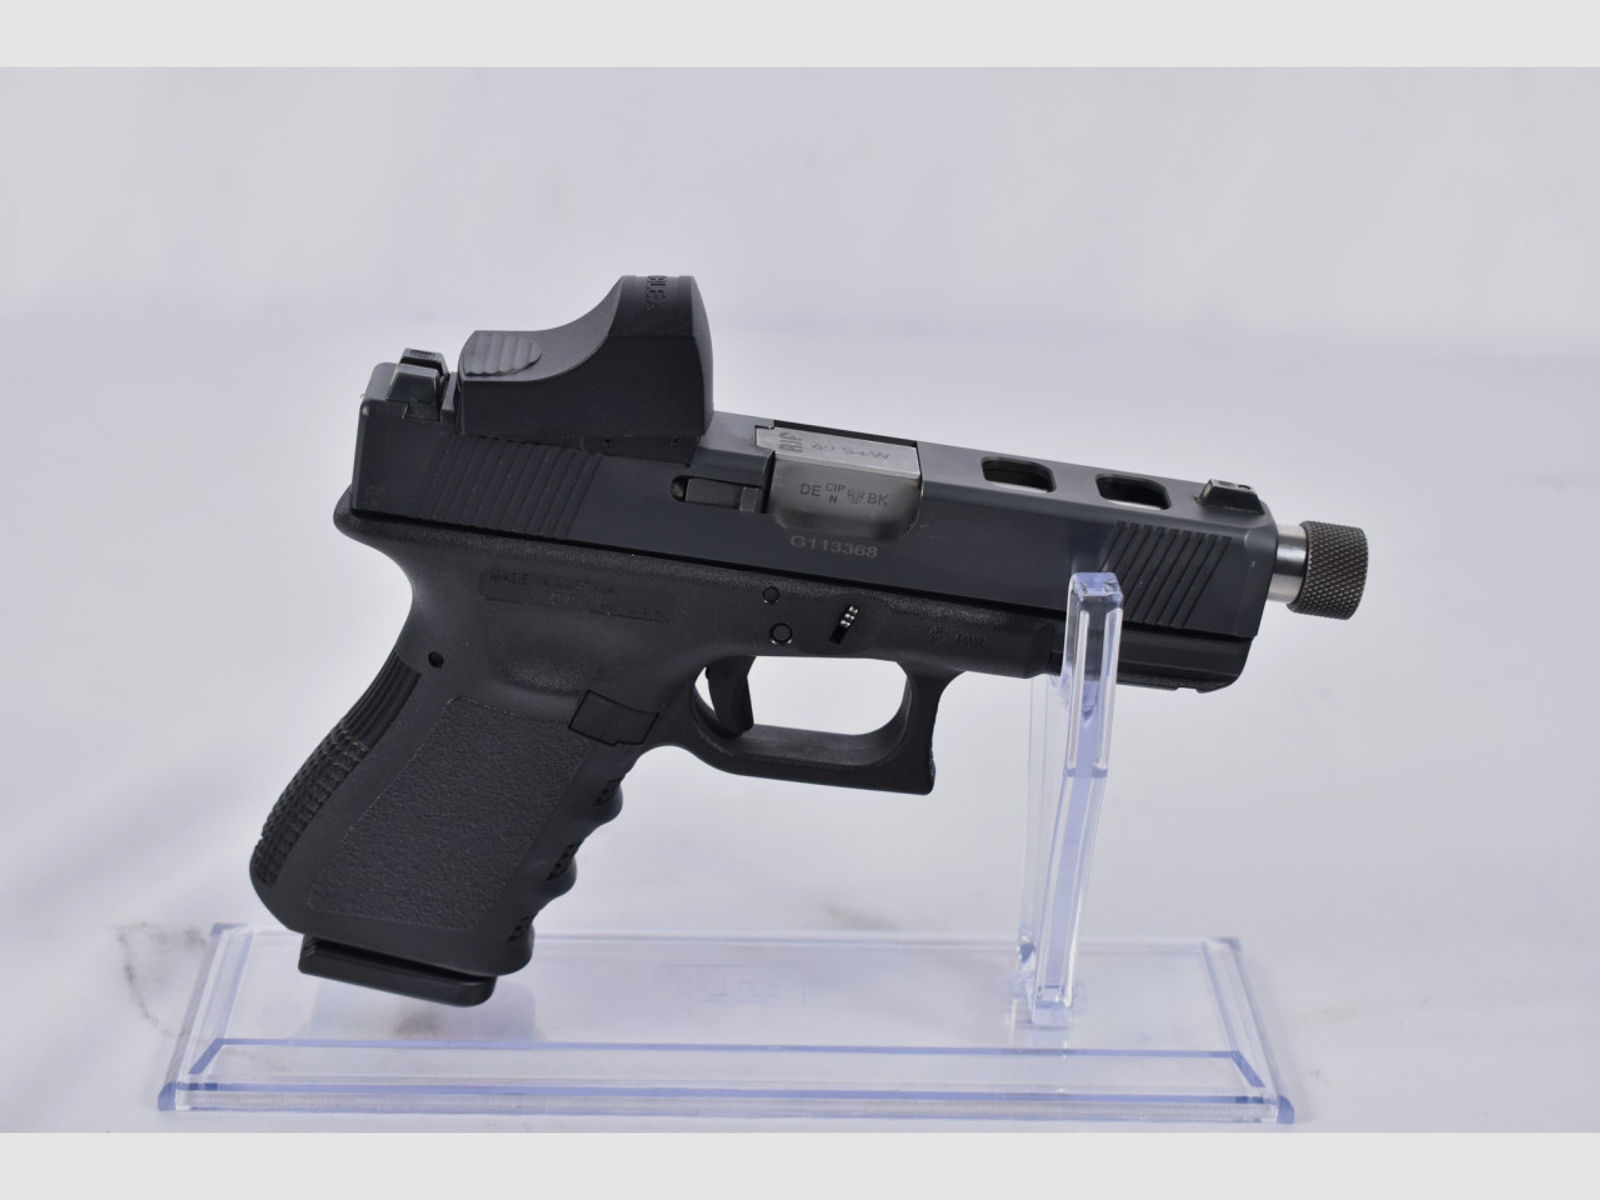 RBF Custom Glock Venari Compact .40S&W Pistole